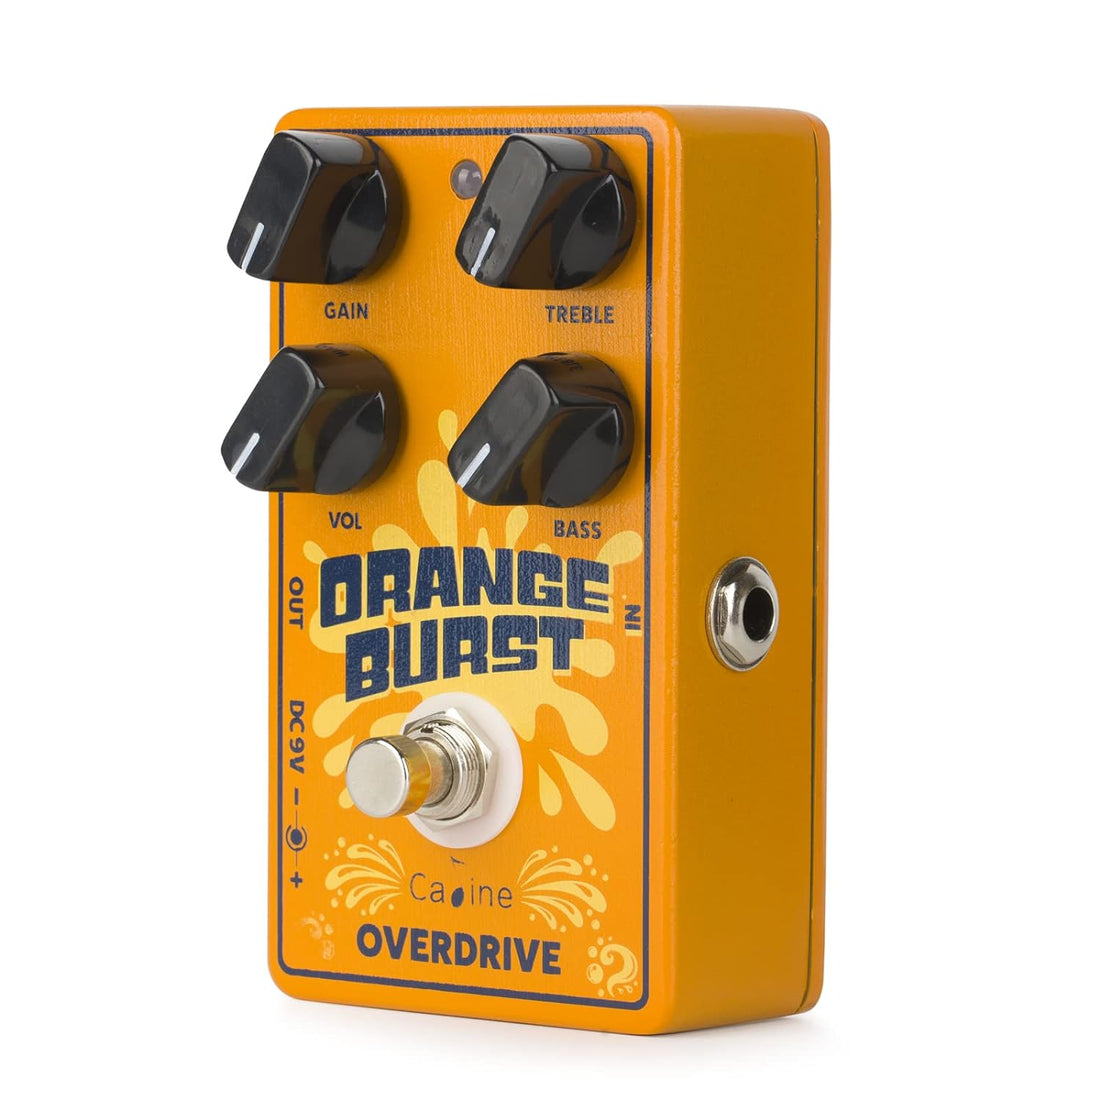 Caline CP-516 Orange Burst Overdrive Guitar Effect Pedal True Bypass Design